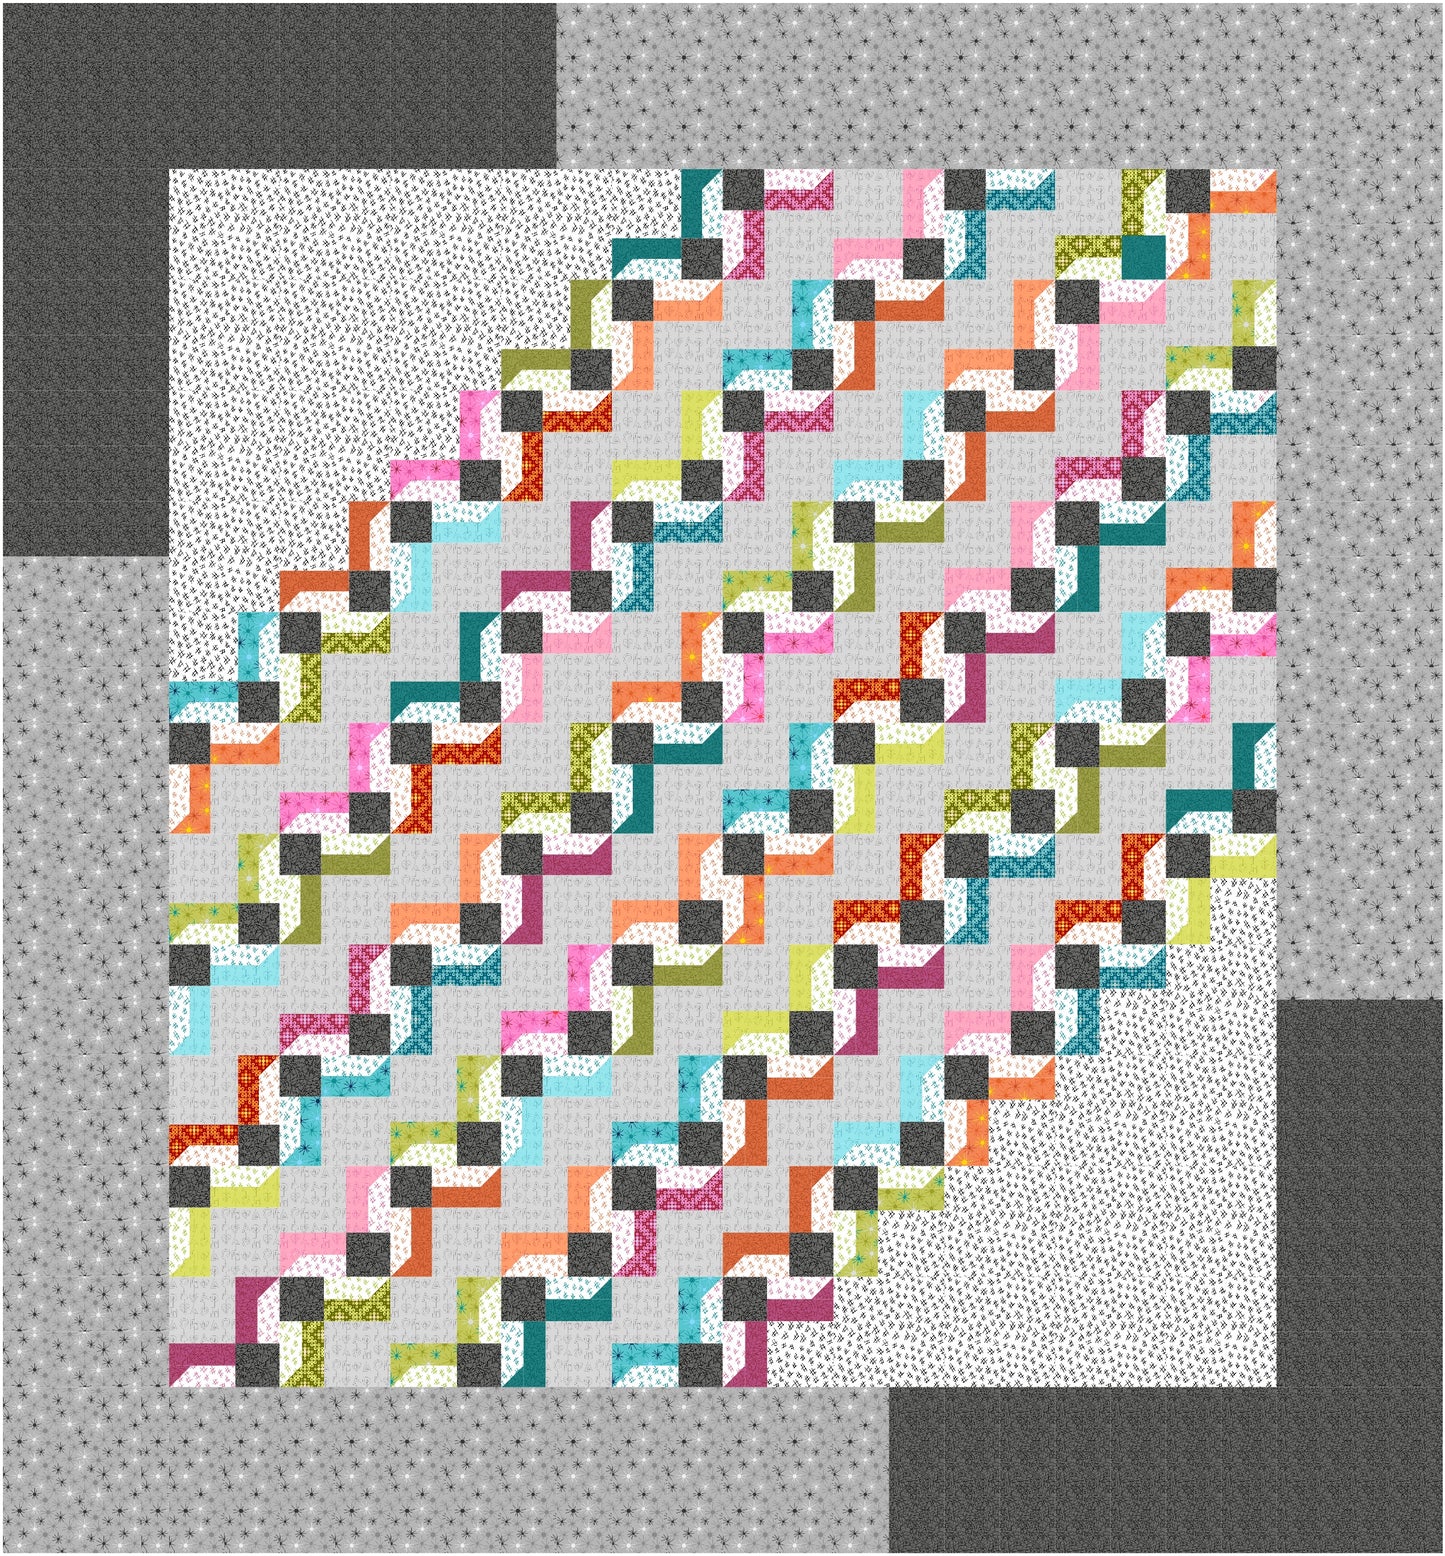 CQ130 Interlinked Quilt Pattern Wholesale - Minimum Purchase of 3 per pattern